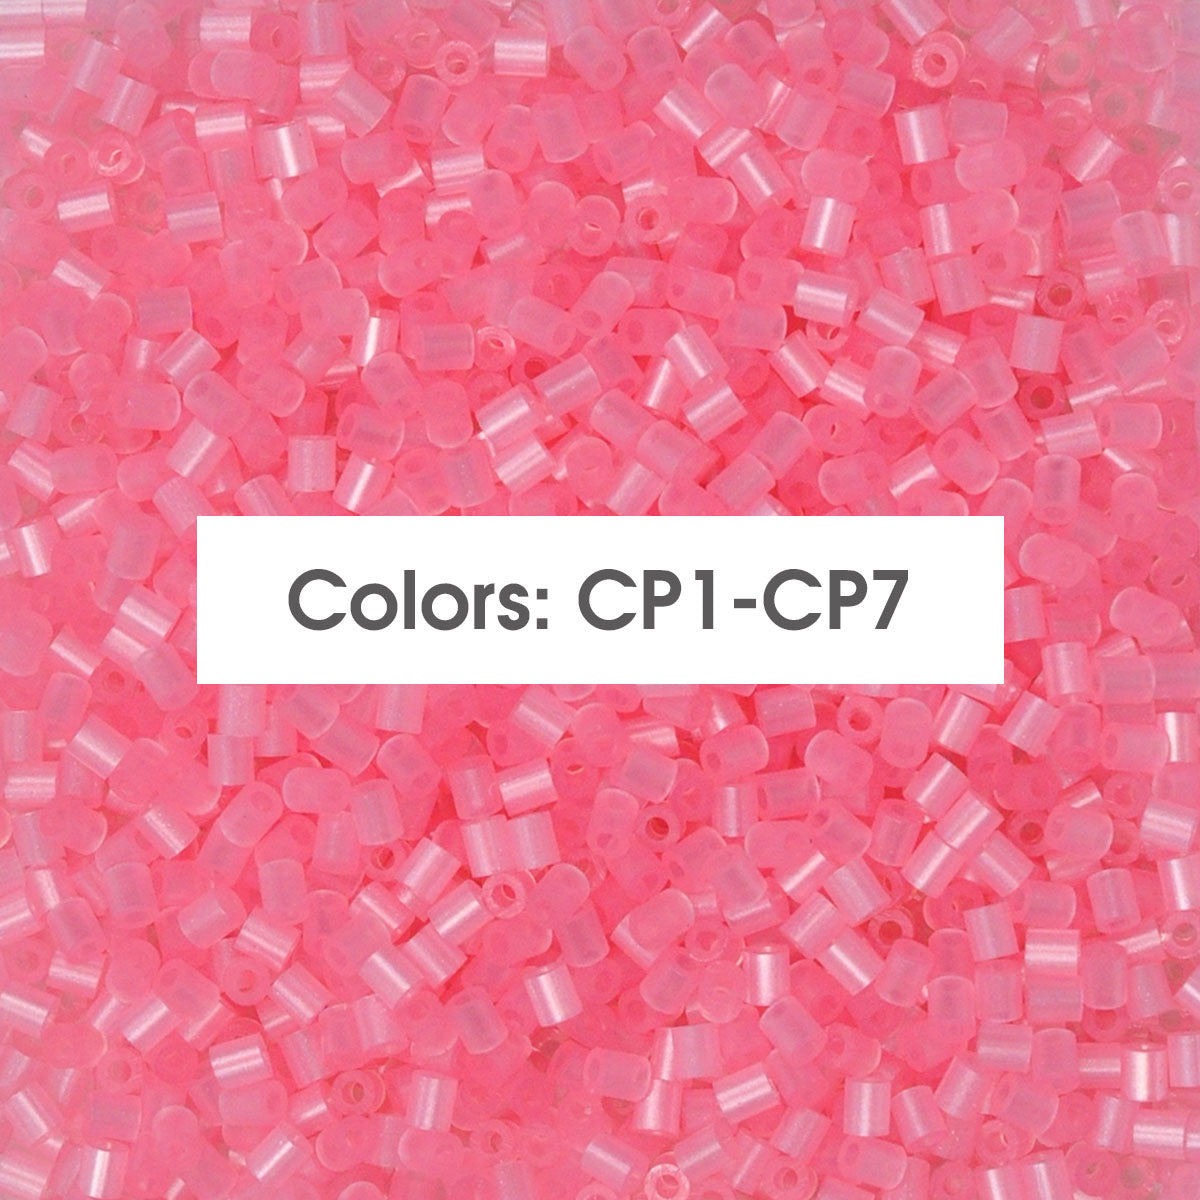 (CP1-CP7 Margarita Colorum) C-500G in mole